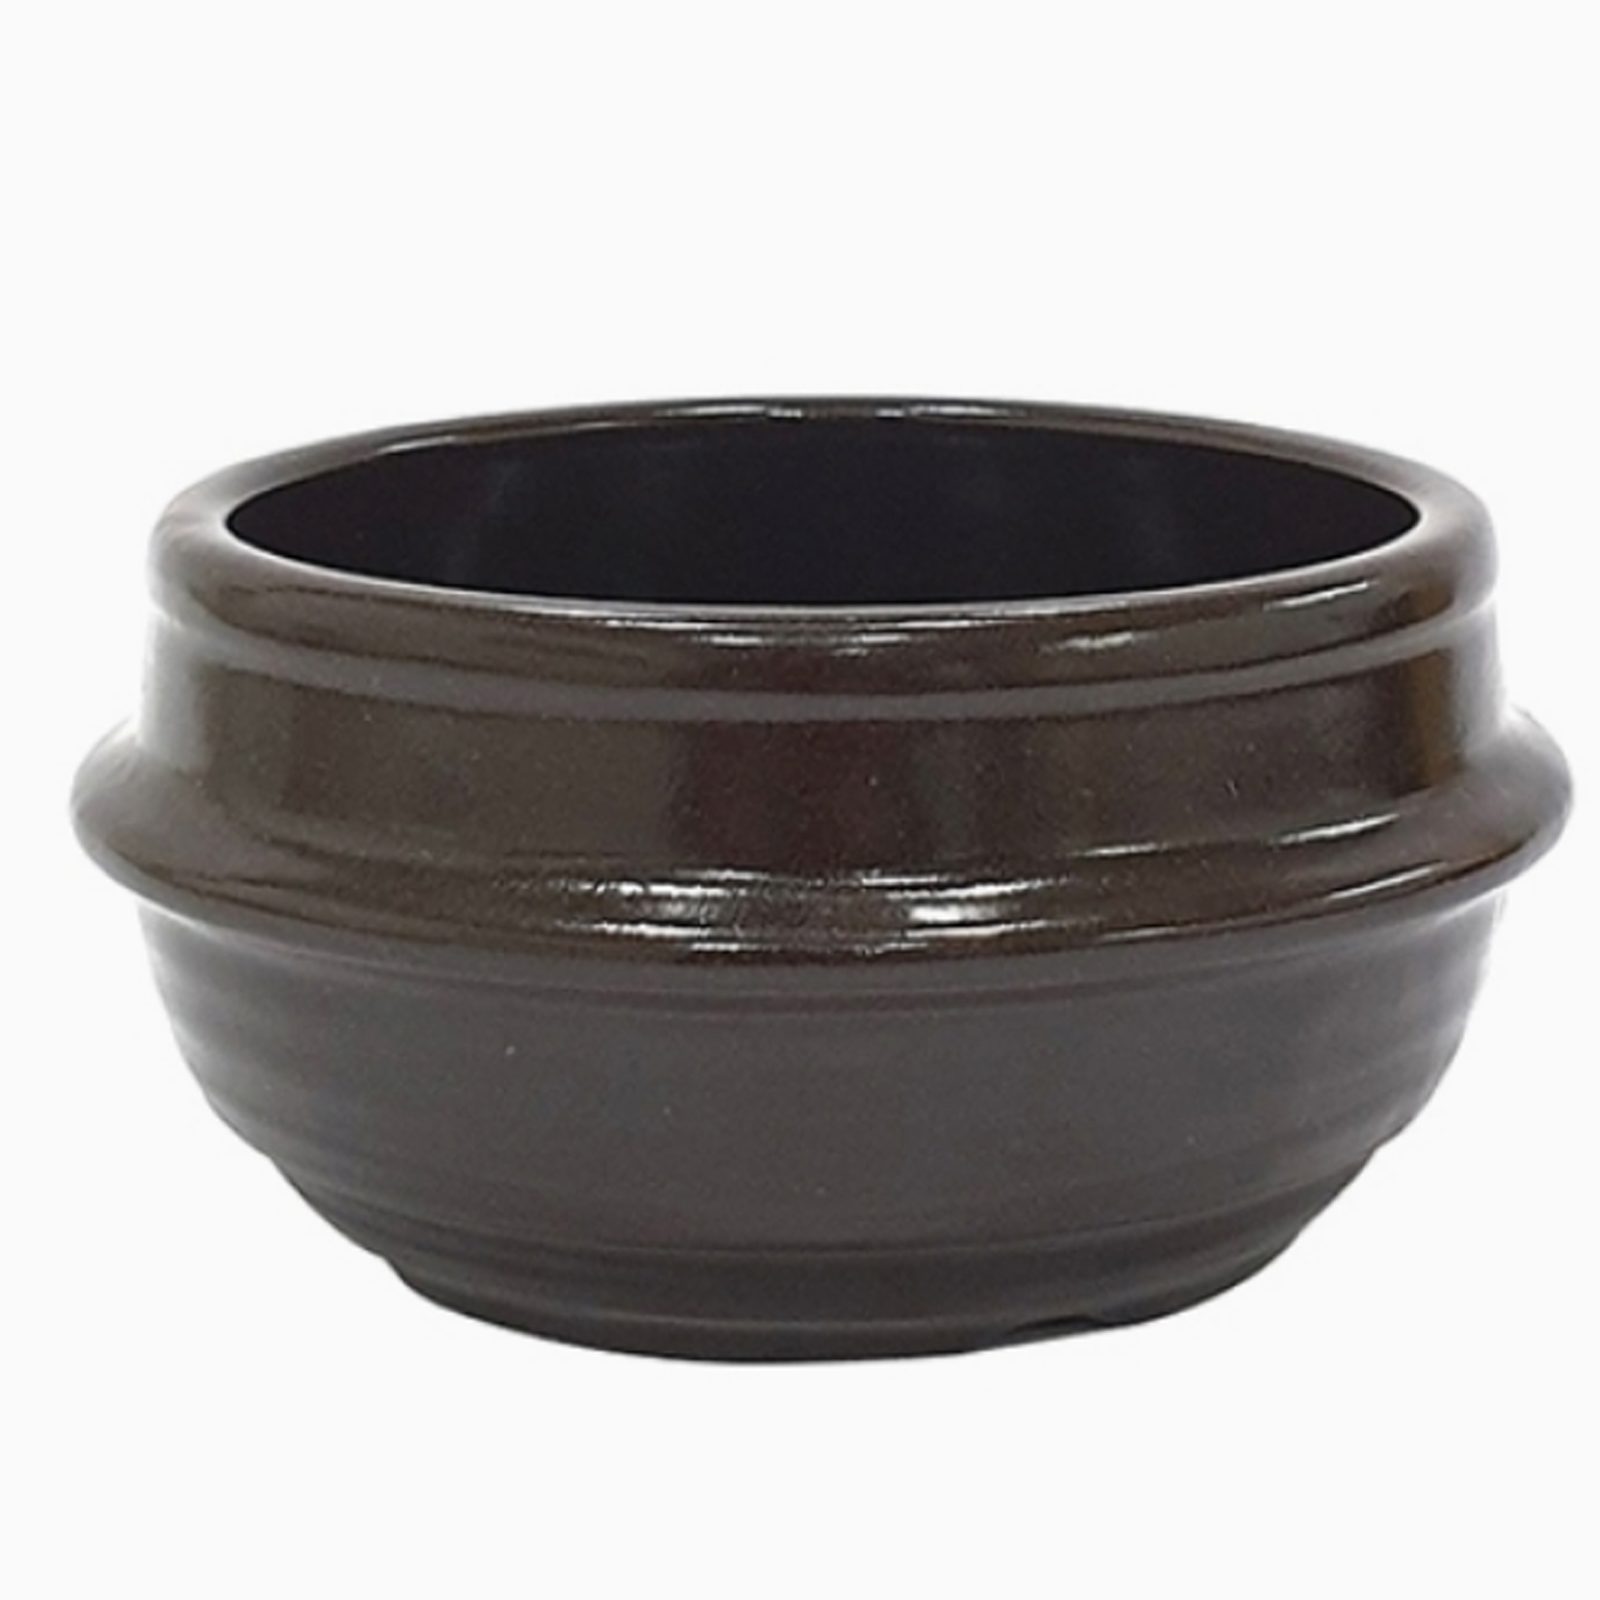  Korean Premium Stoneware Black Casserole Clay Pot with